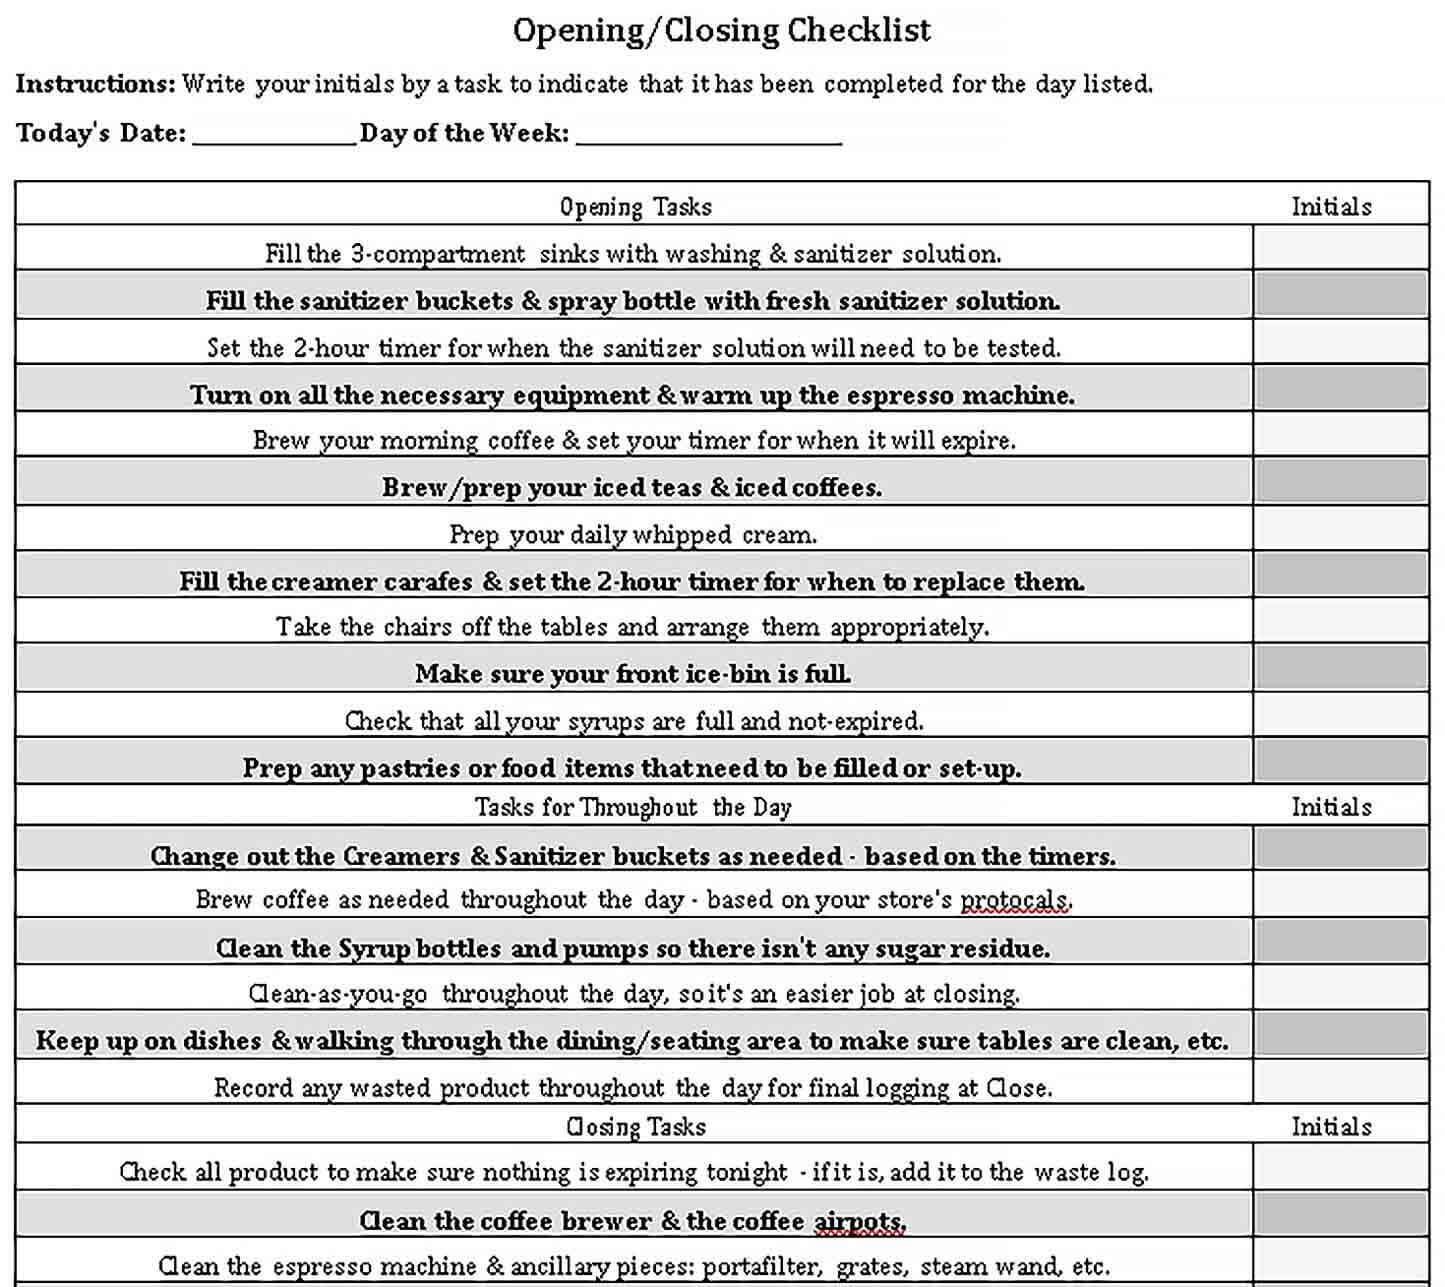 opening checklist 2